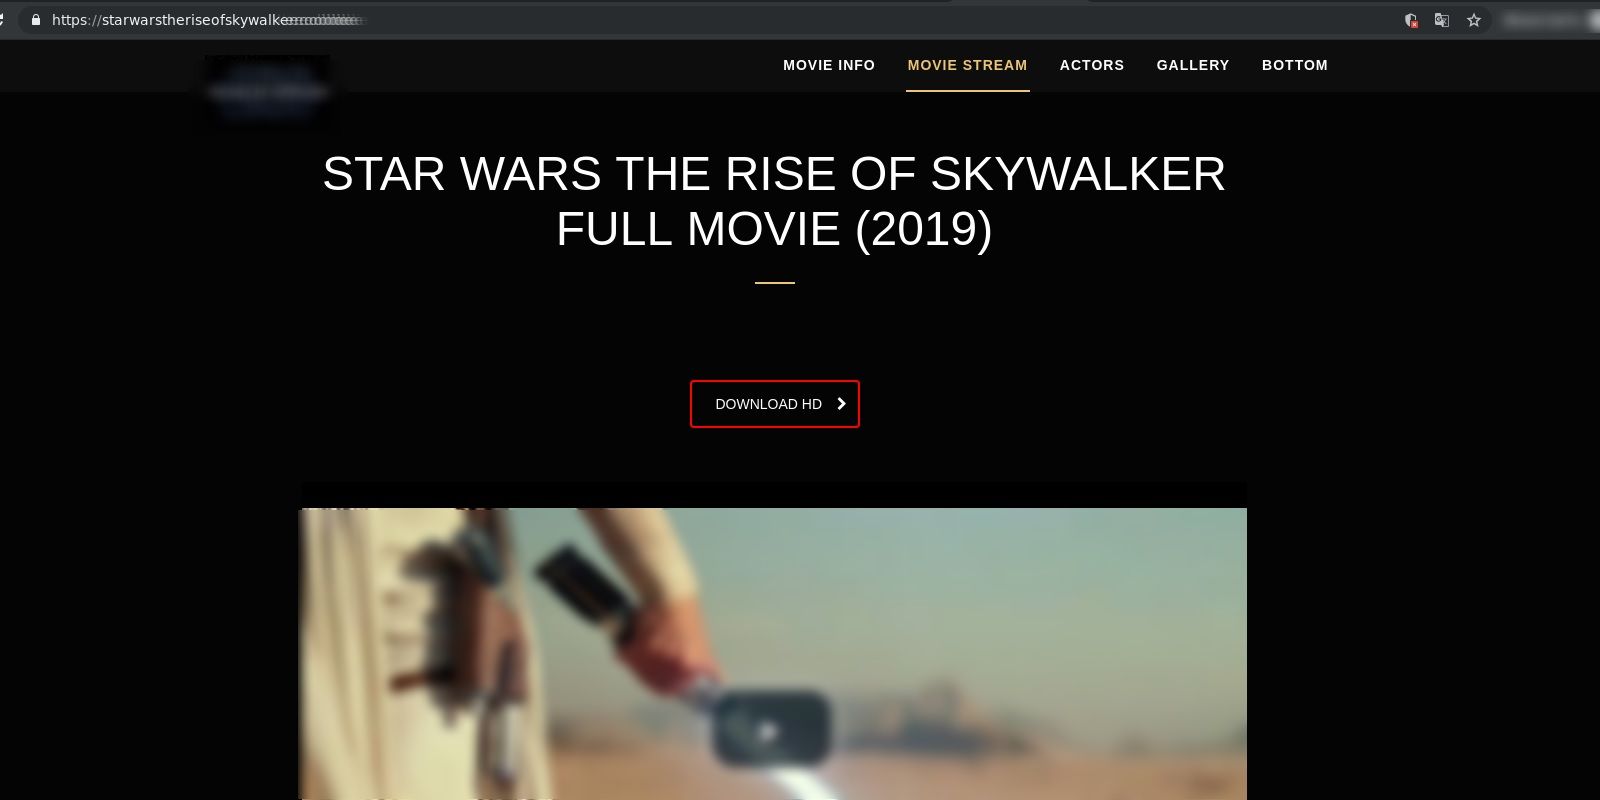 Fake Star Wars websites